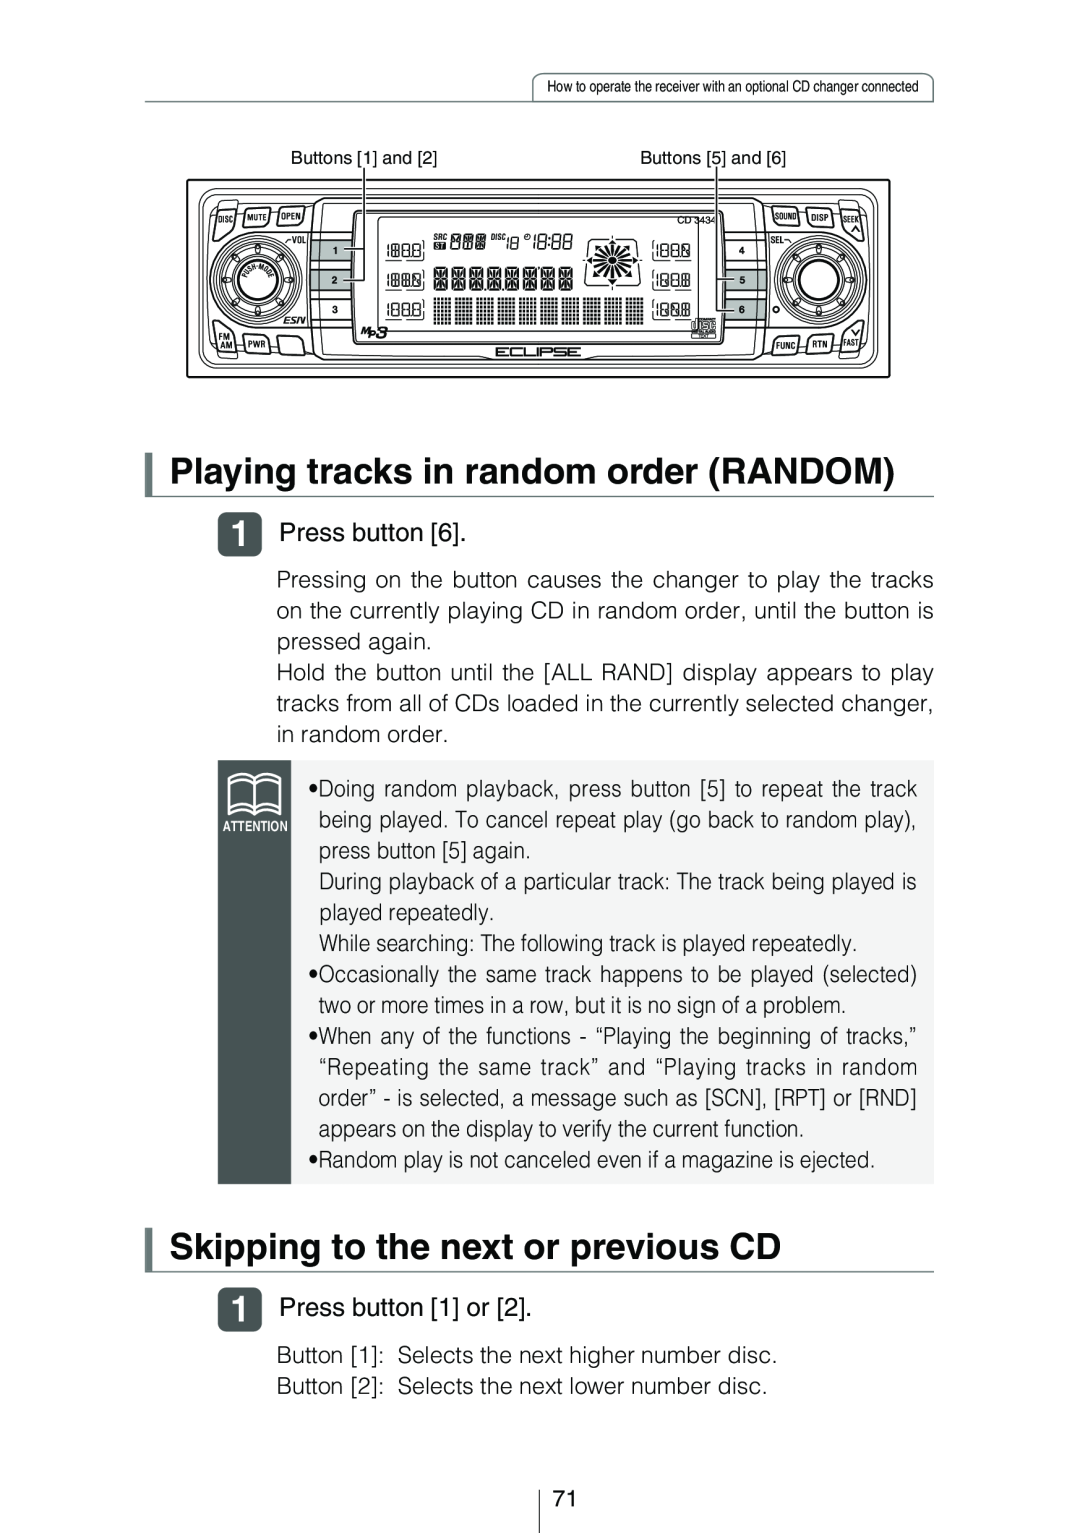 Eclipse - Fujitsu Ten CD3434 Skipping to the next or previous CD, Playing tracks in random order RANDOM, Press button 